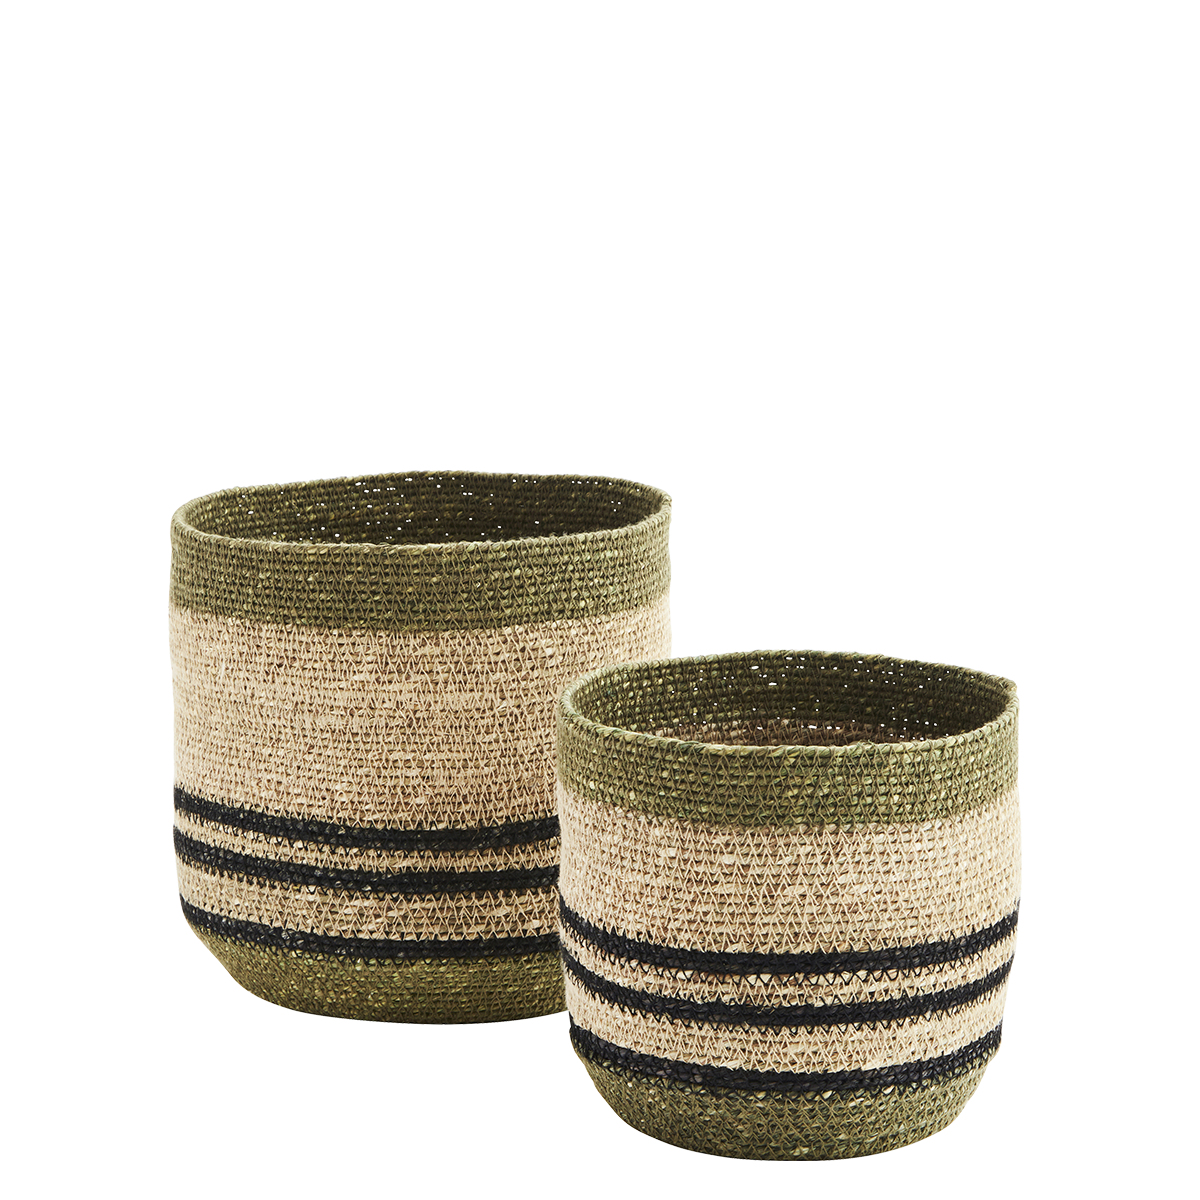 Striped seagrass baskets